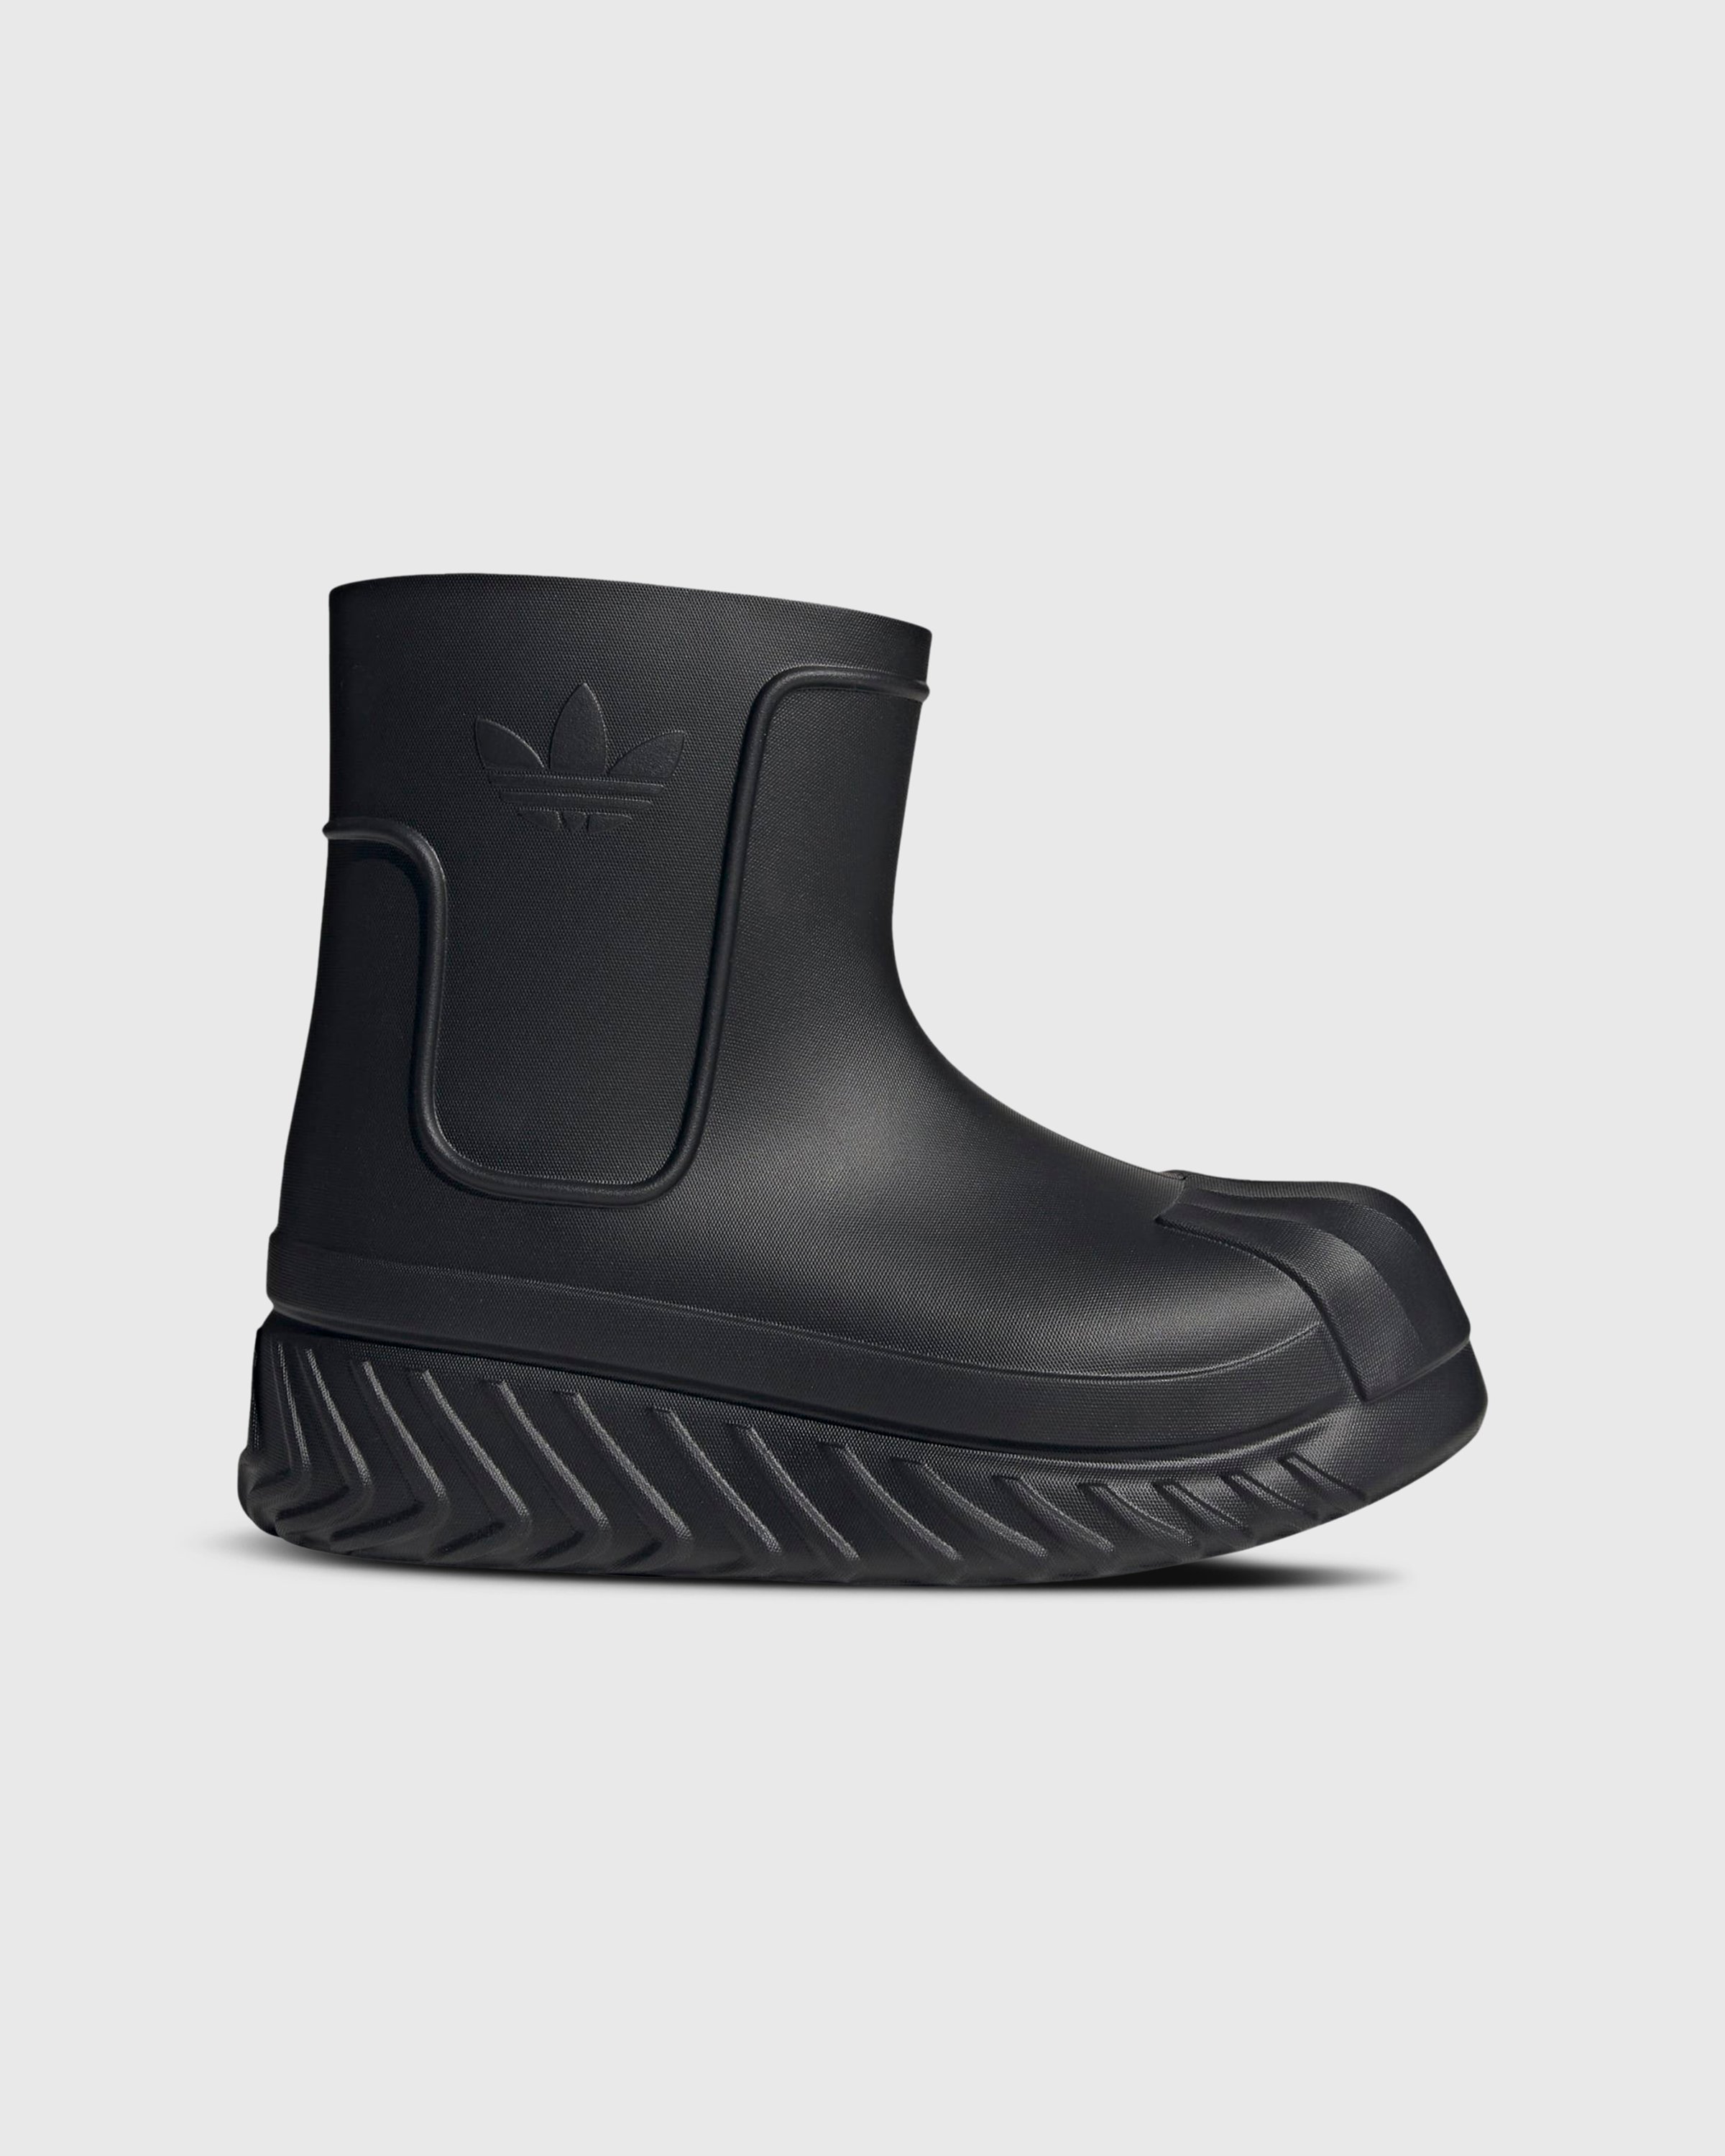 Adidas - ADIFOM SUPERSTAR BO CBLACK/CBLACK/GRESIX - Footwear - Black - Image 1